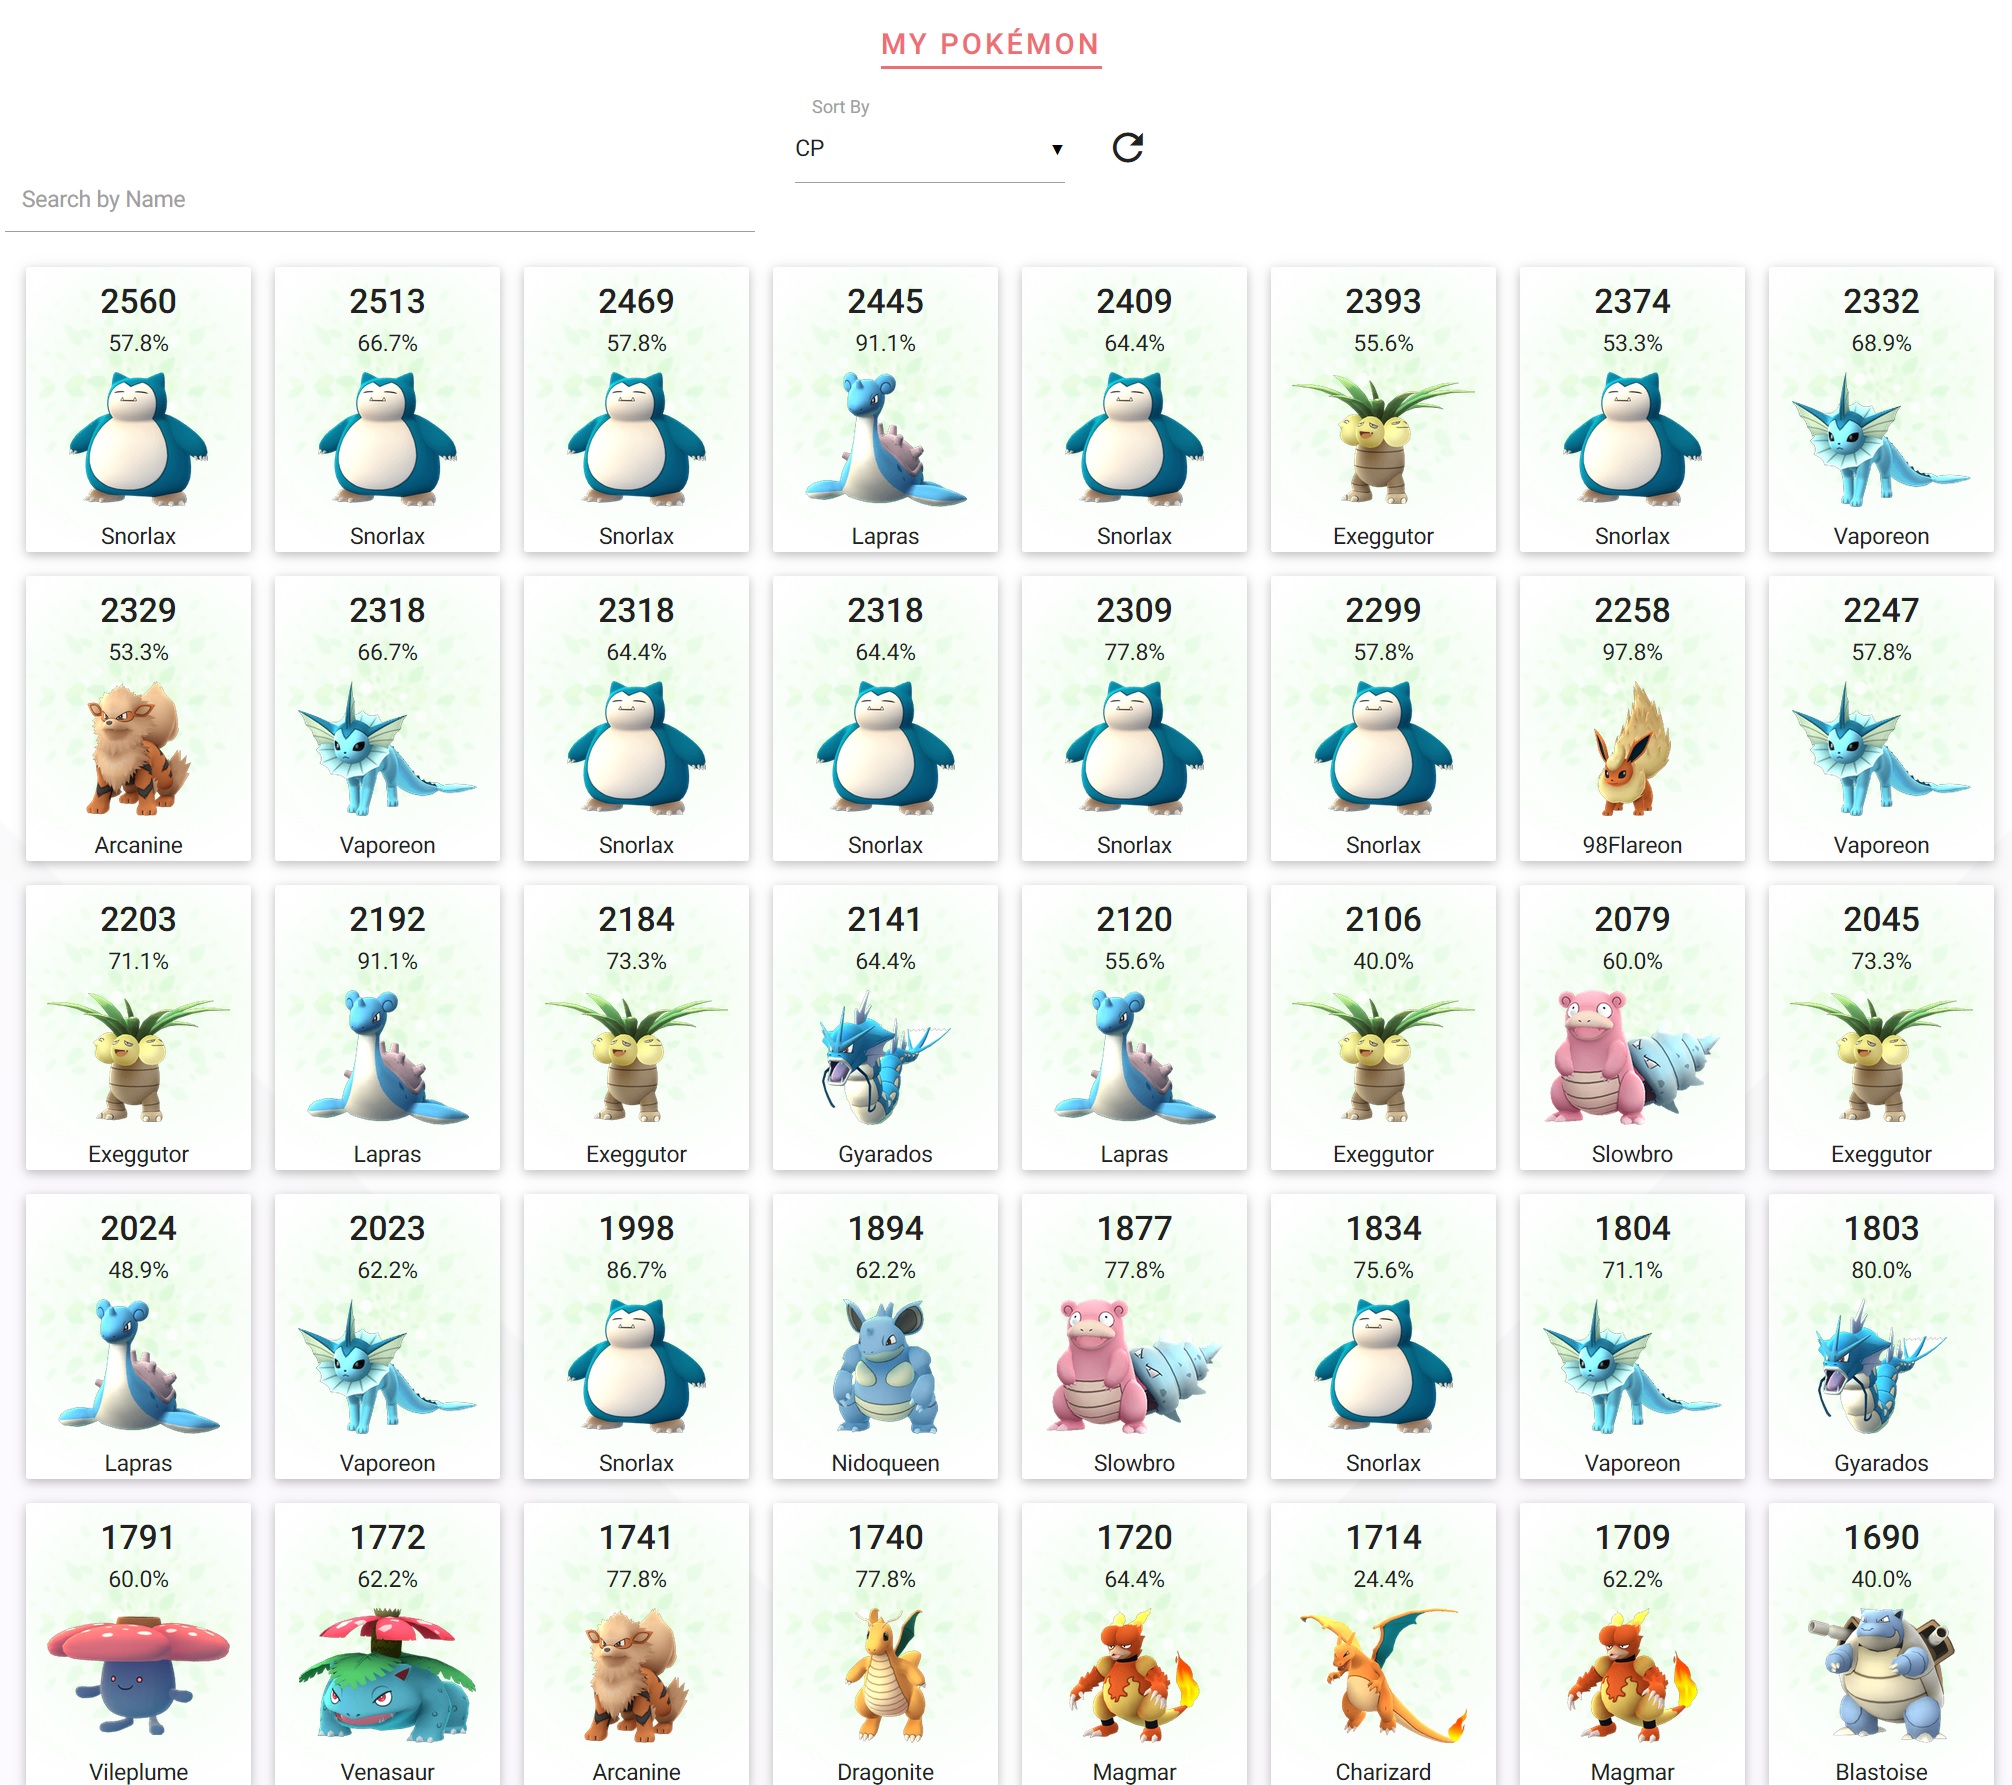 Selling - Pokemon go account level 30 with pokedex almost full - EpicNPC